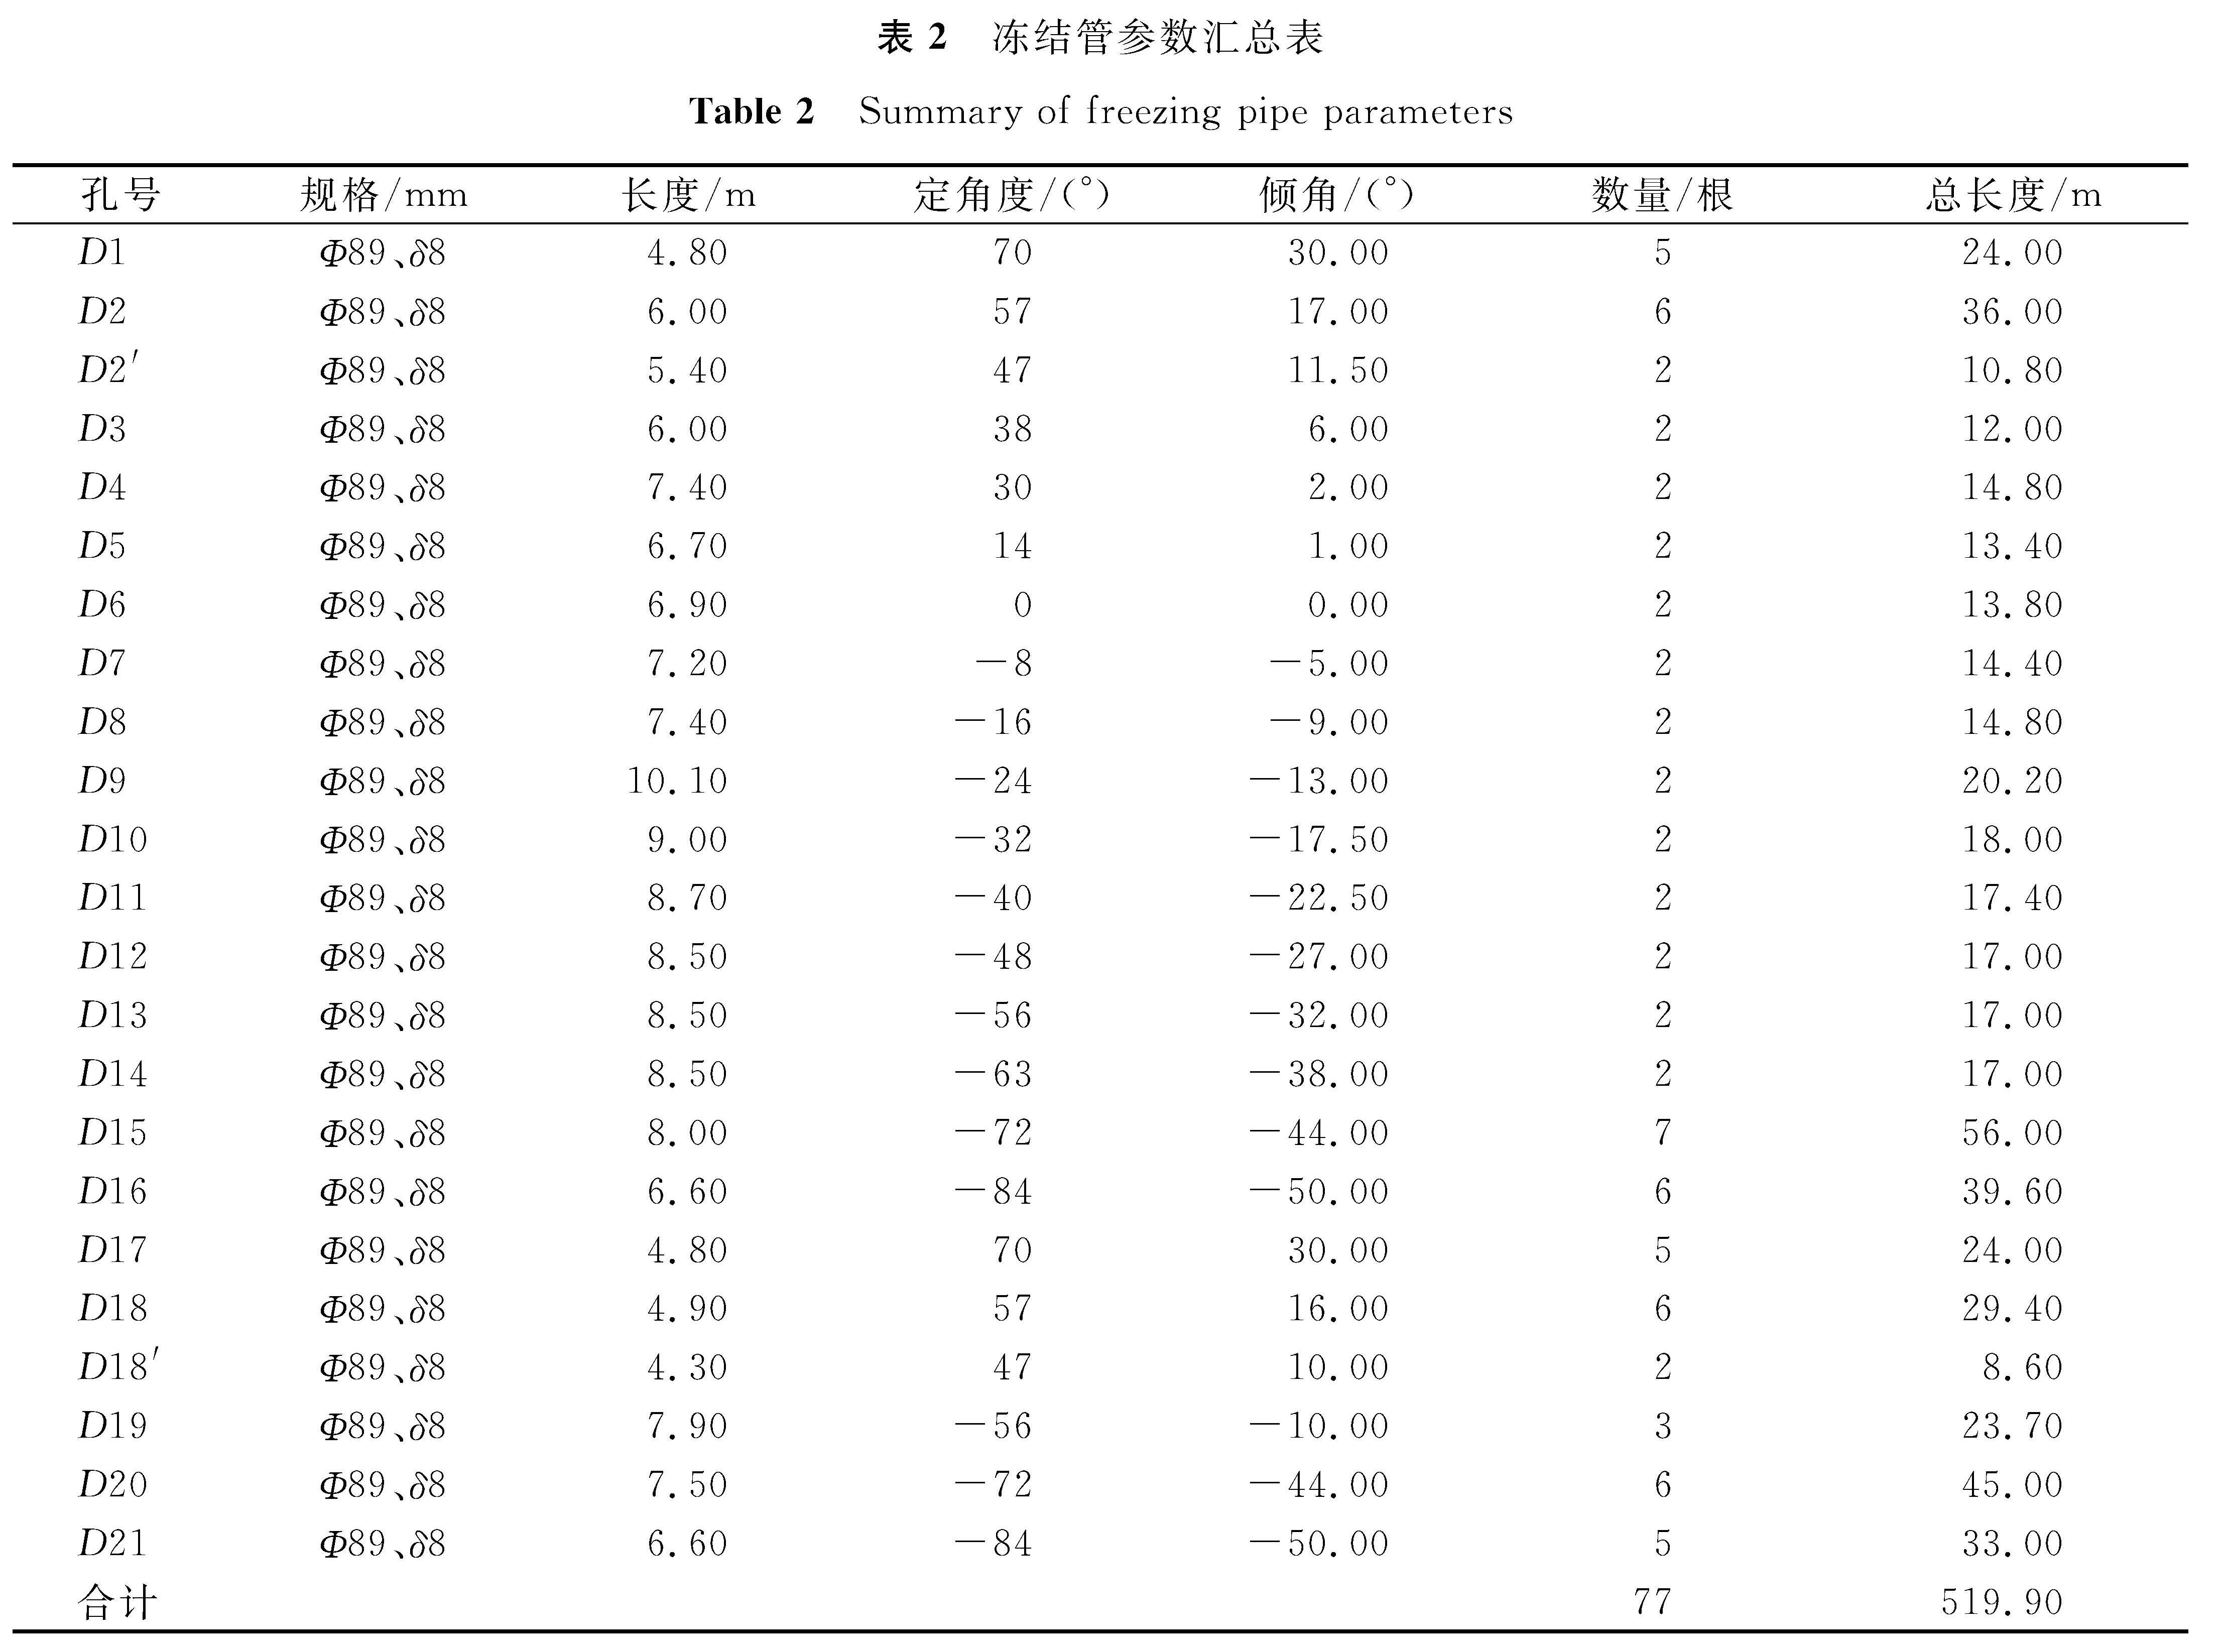 表2 冻结管参数汇总表<br/>Table 2 Summary of freezing pipe parameters